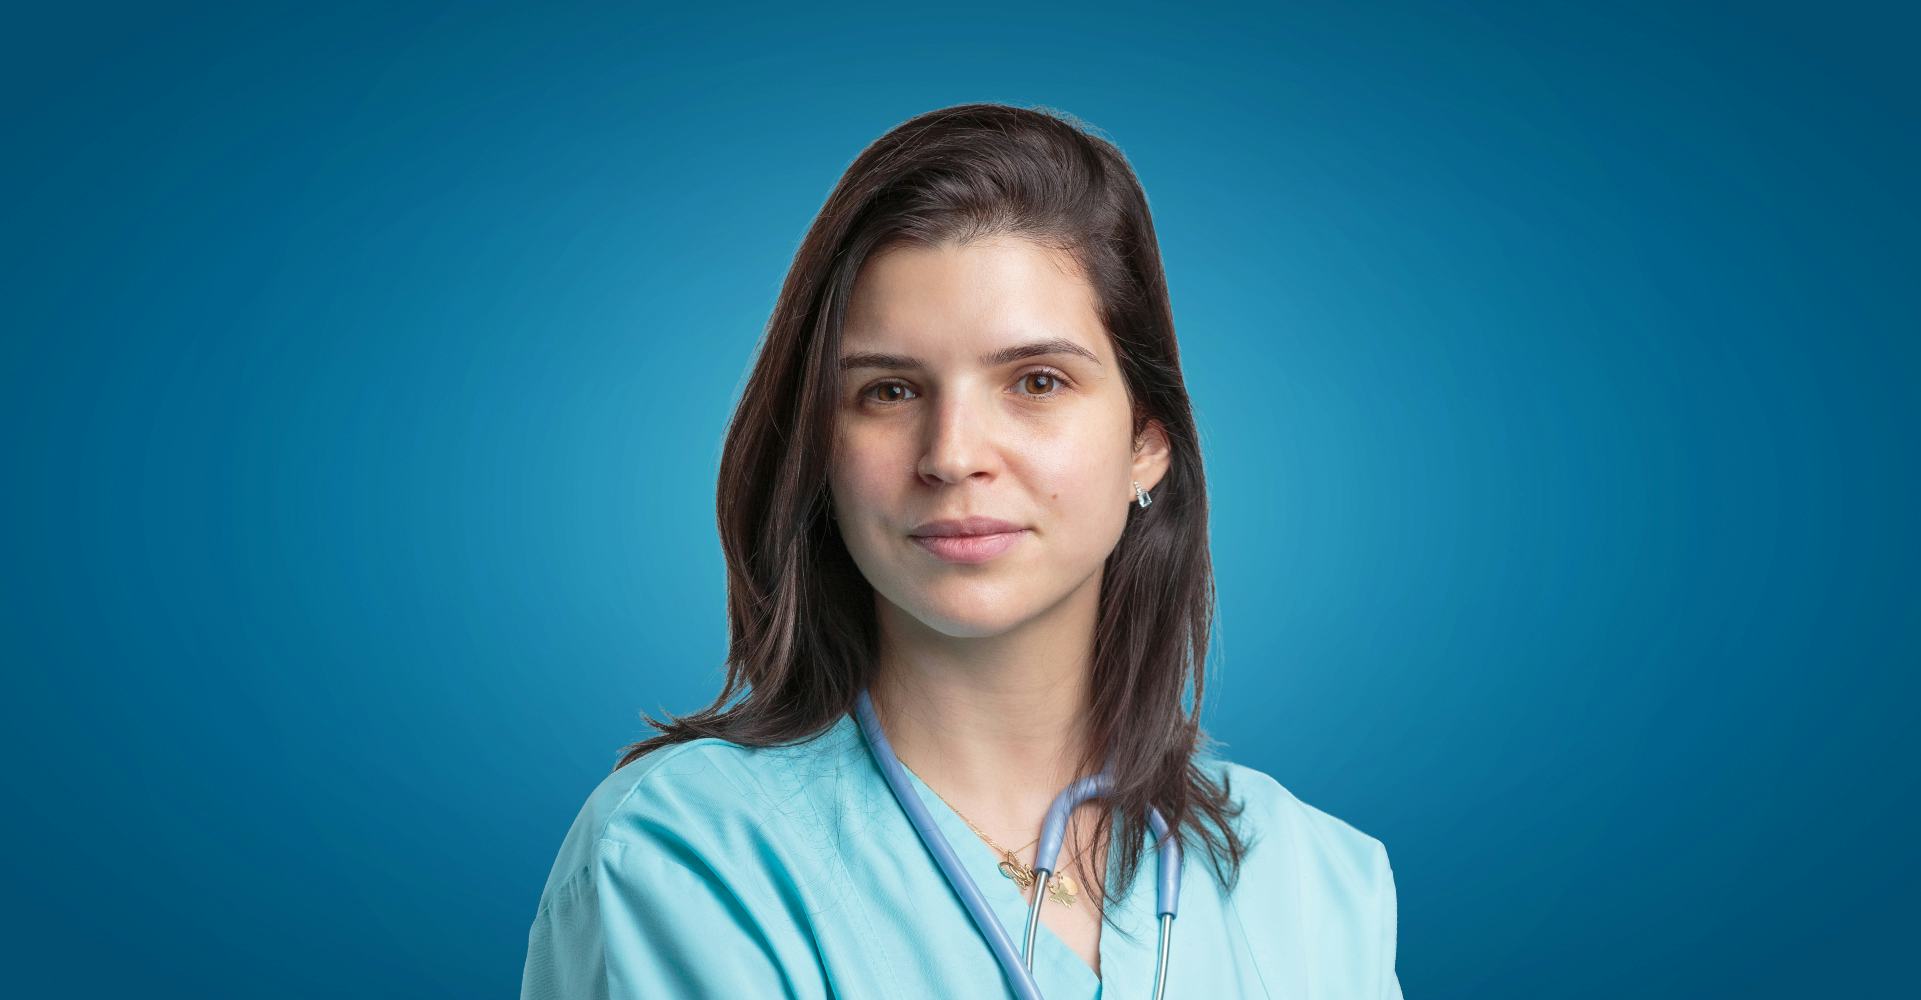 Dr. Sidonia Zărnescu